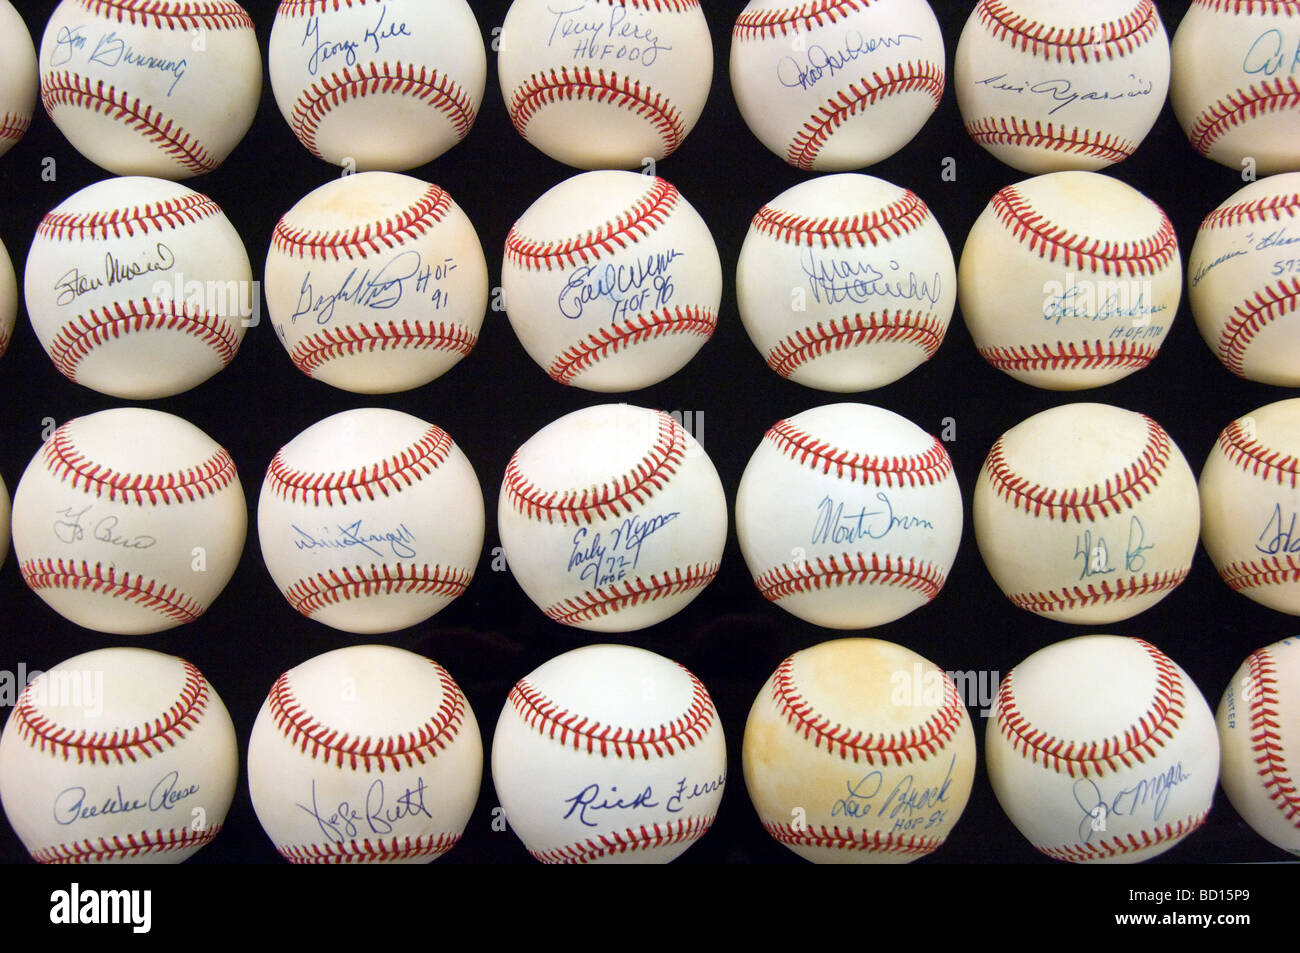 Firmato baseballs Foto Stock